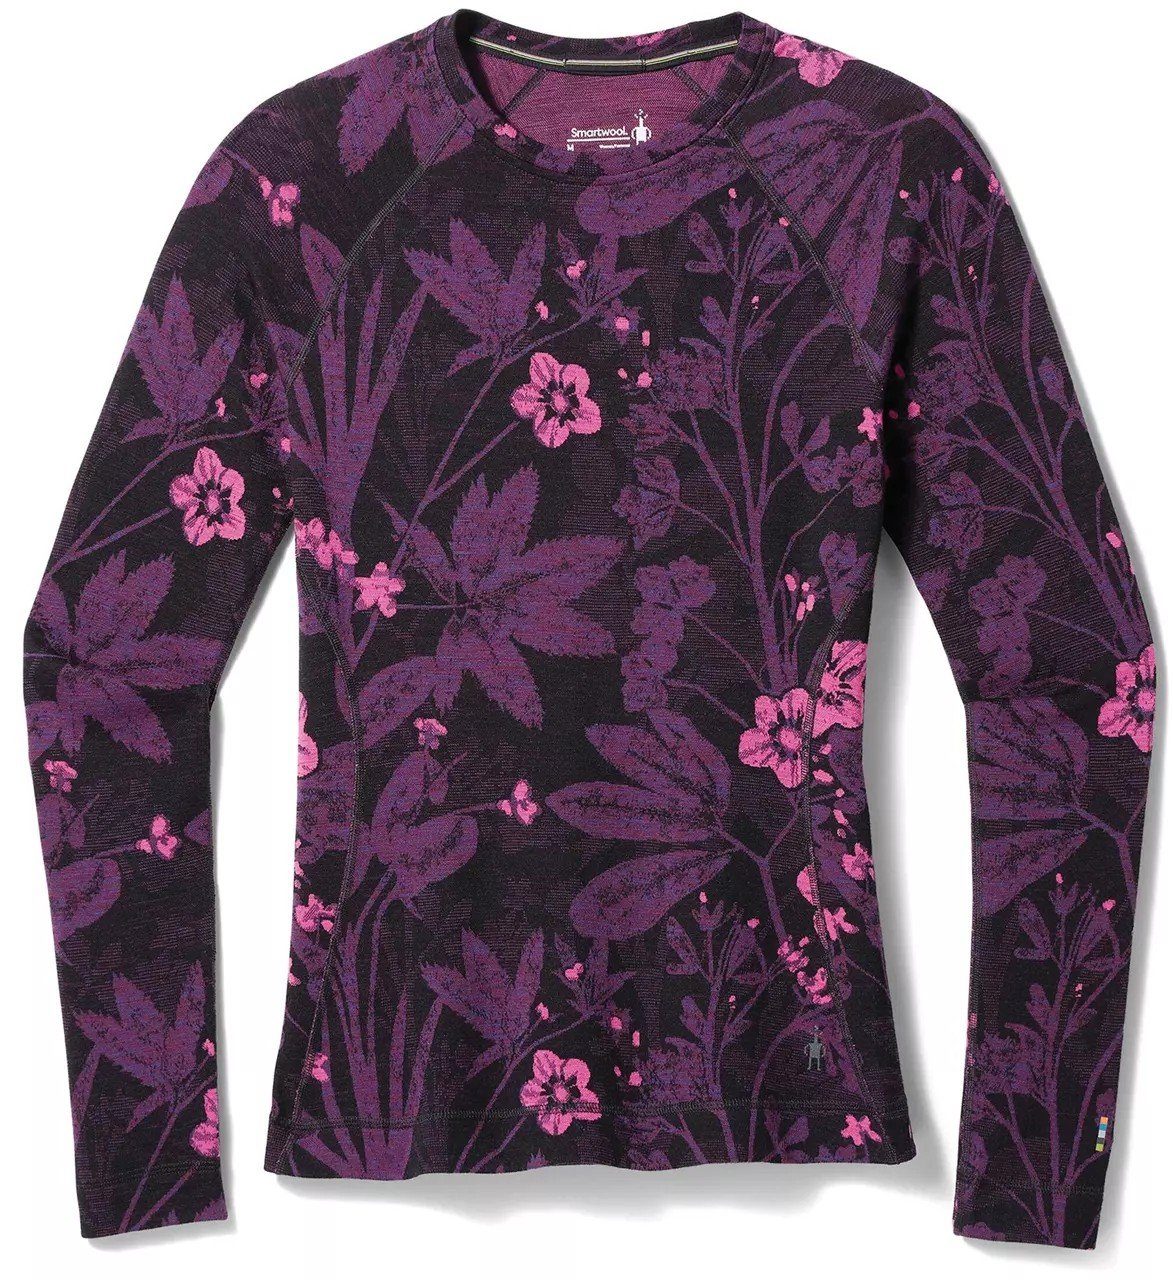 Trangia Funktionsunterhemd Classic Thermal Crew Women purple iris floral